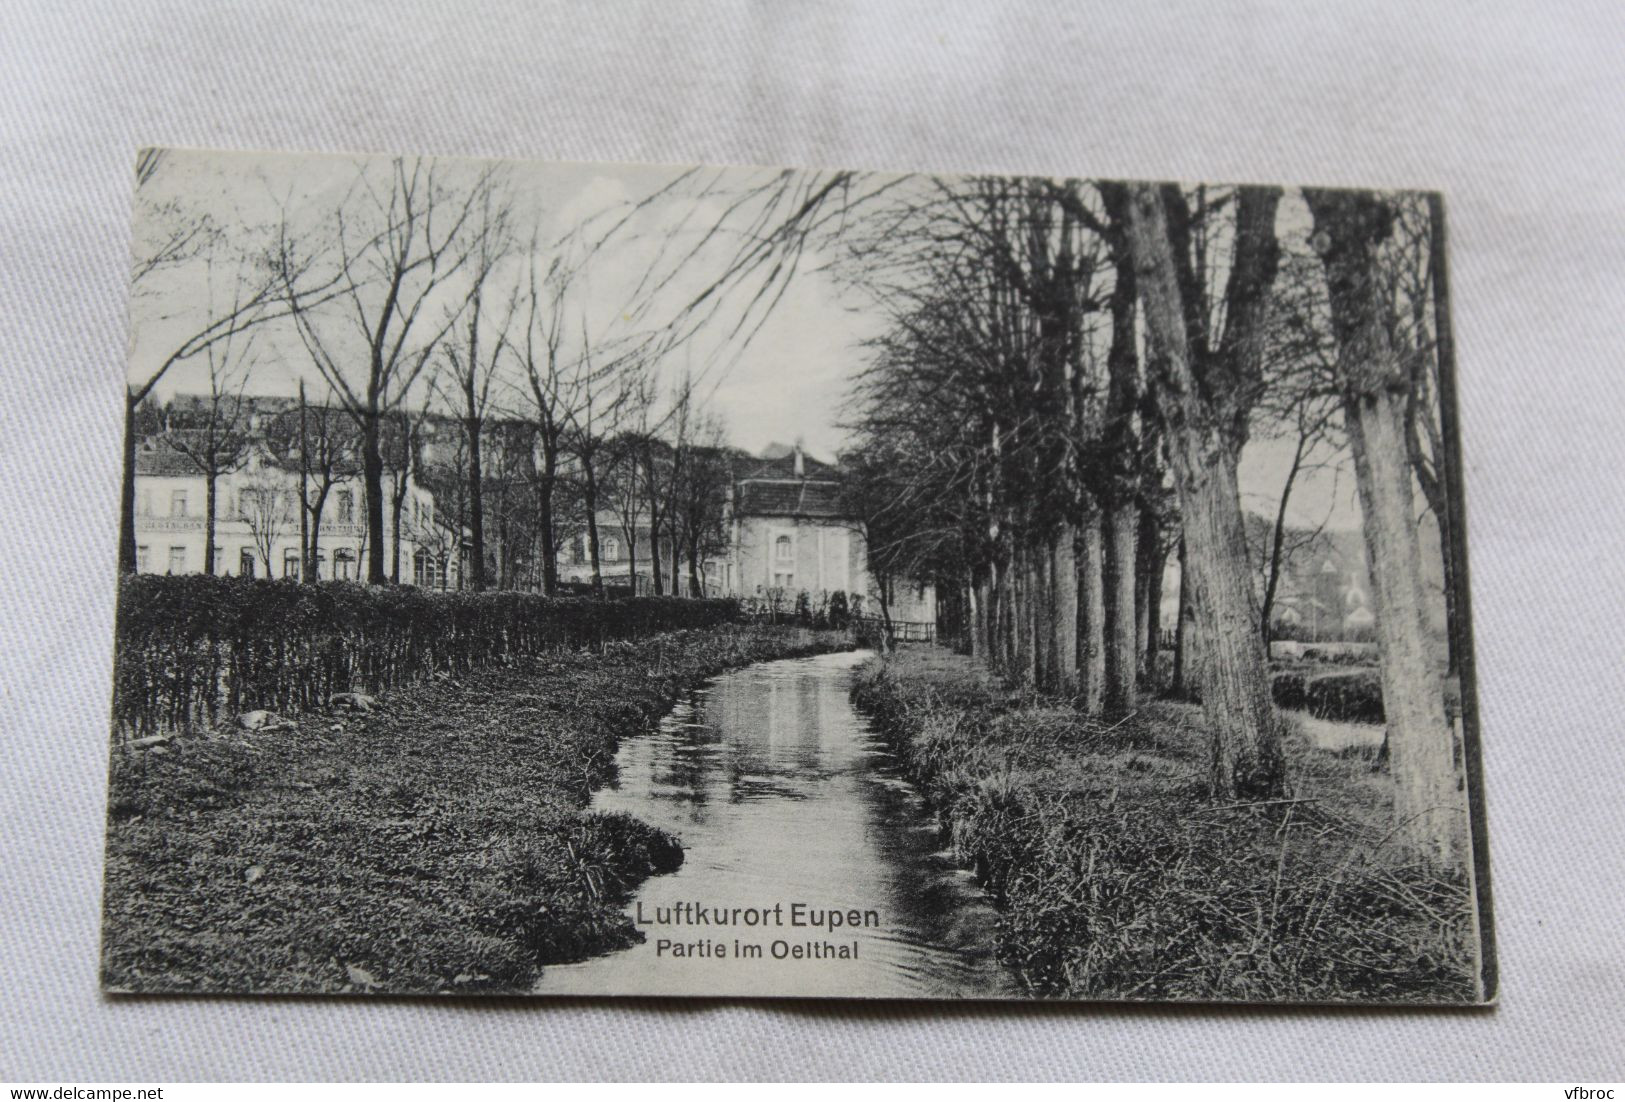 Cpa 1912, Luftkurort Eupen, Partie Im Oelthal, Belgique - Eupen